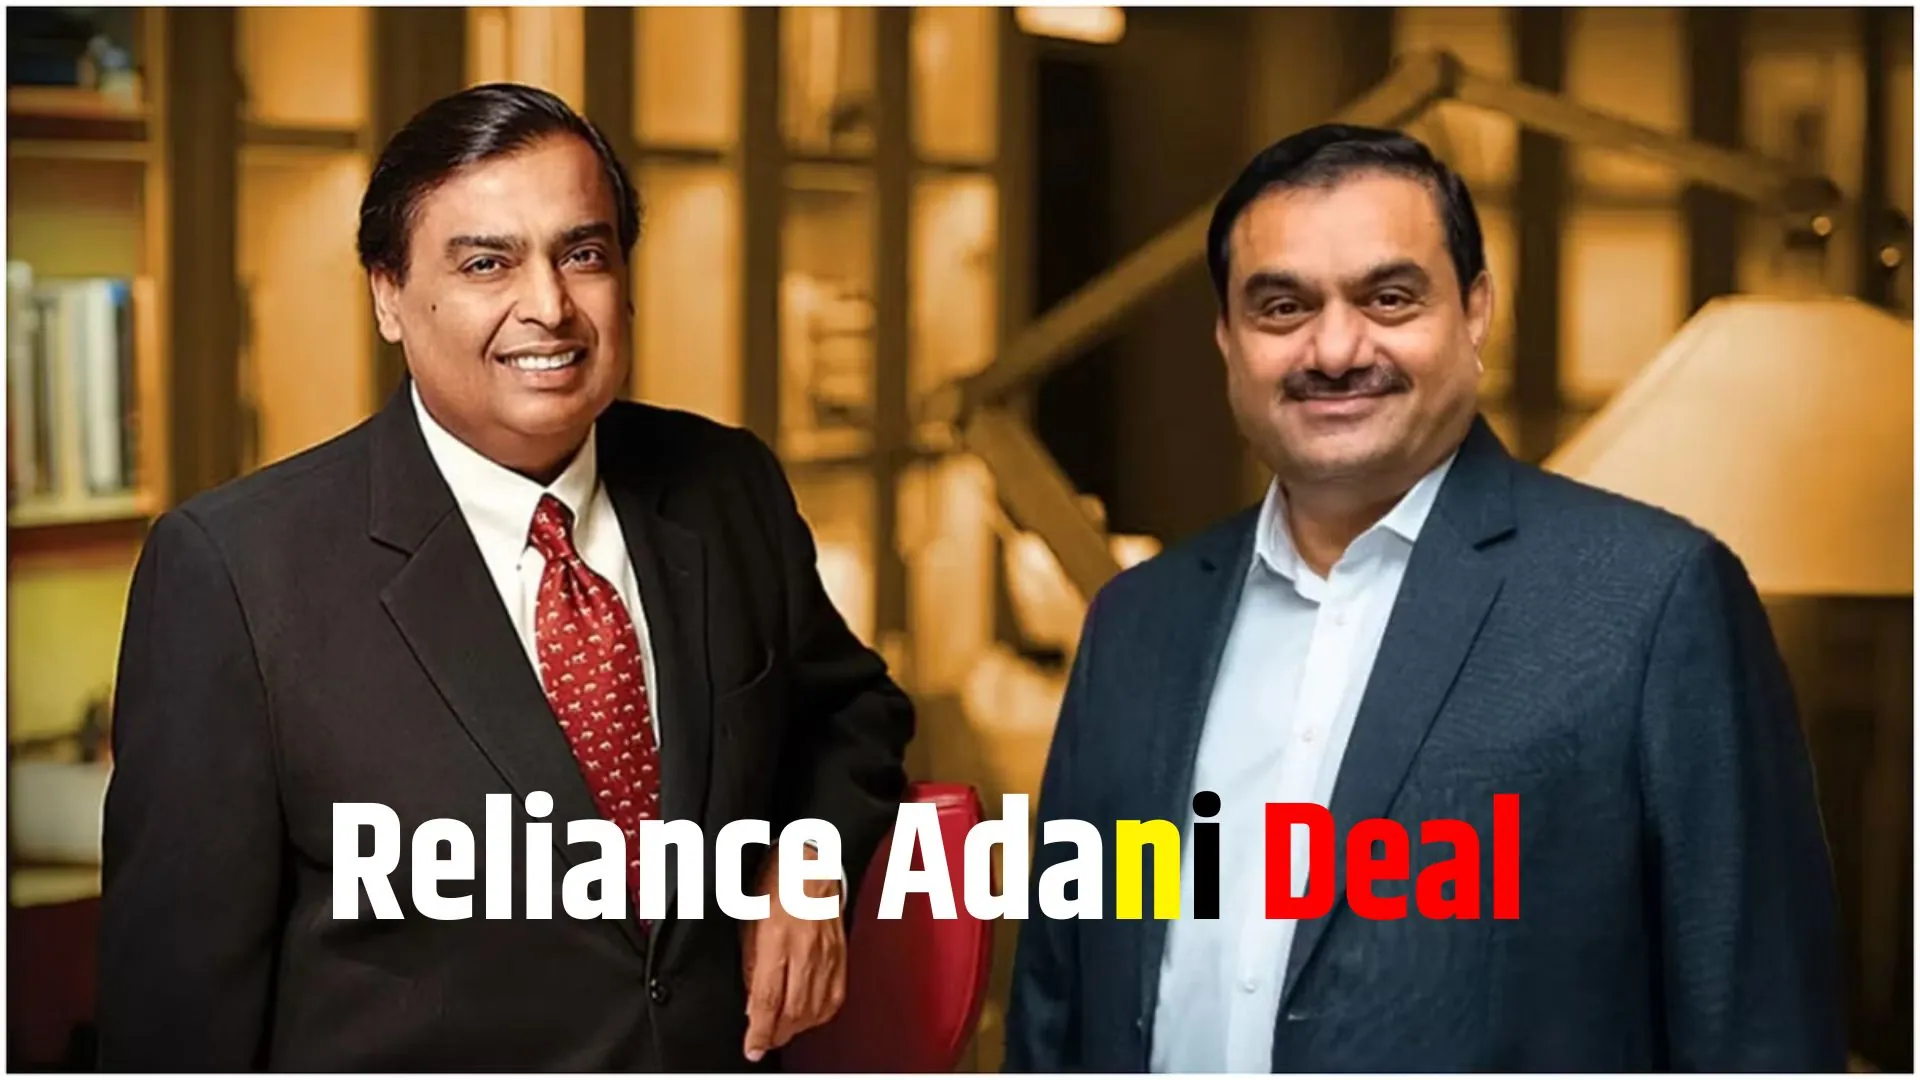 Reliance Adani Deal